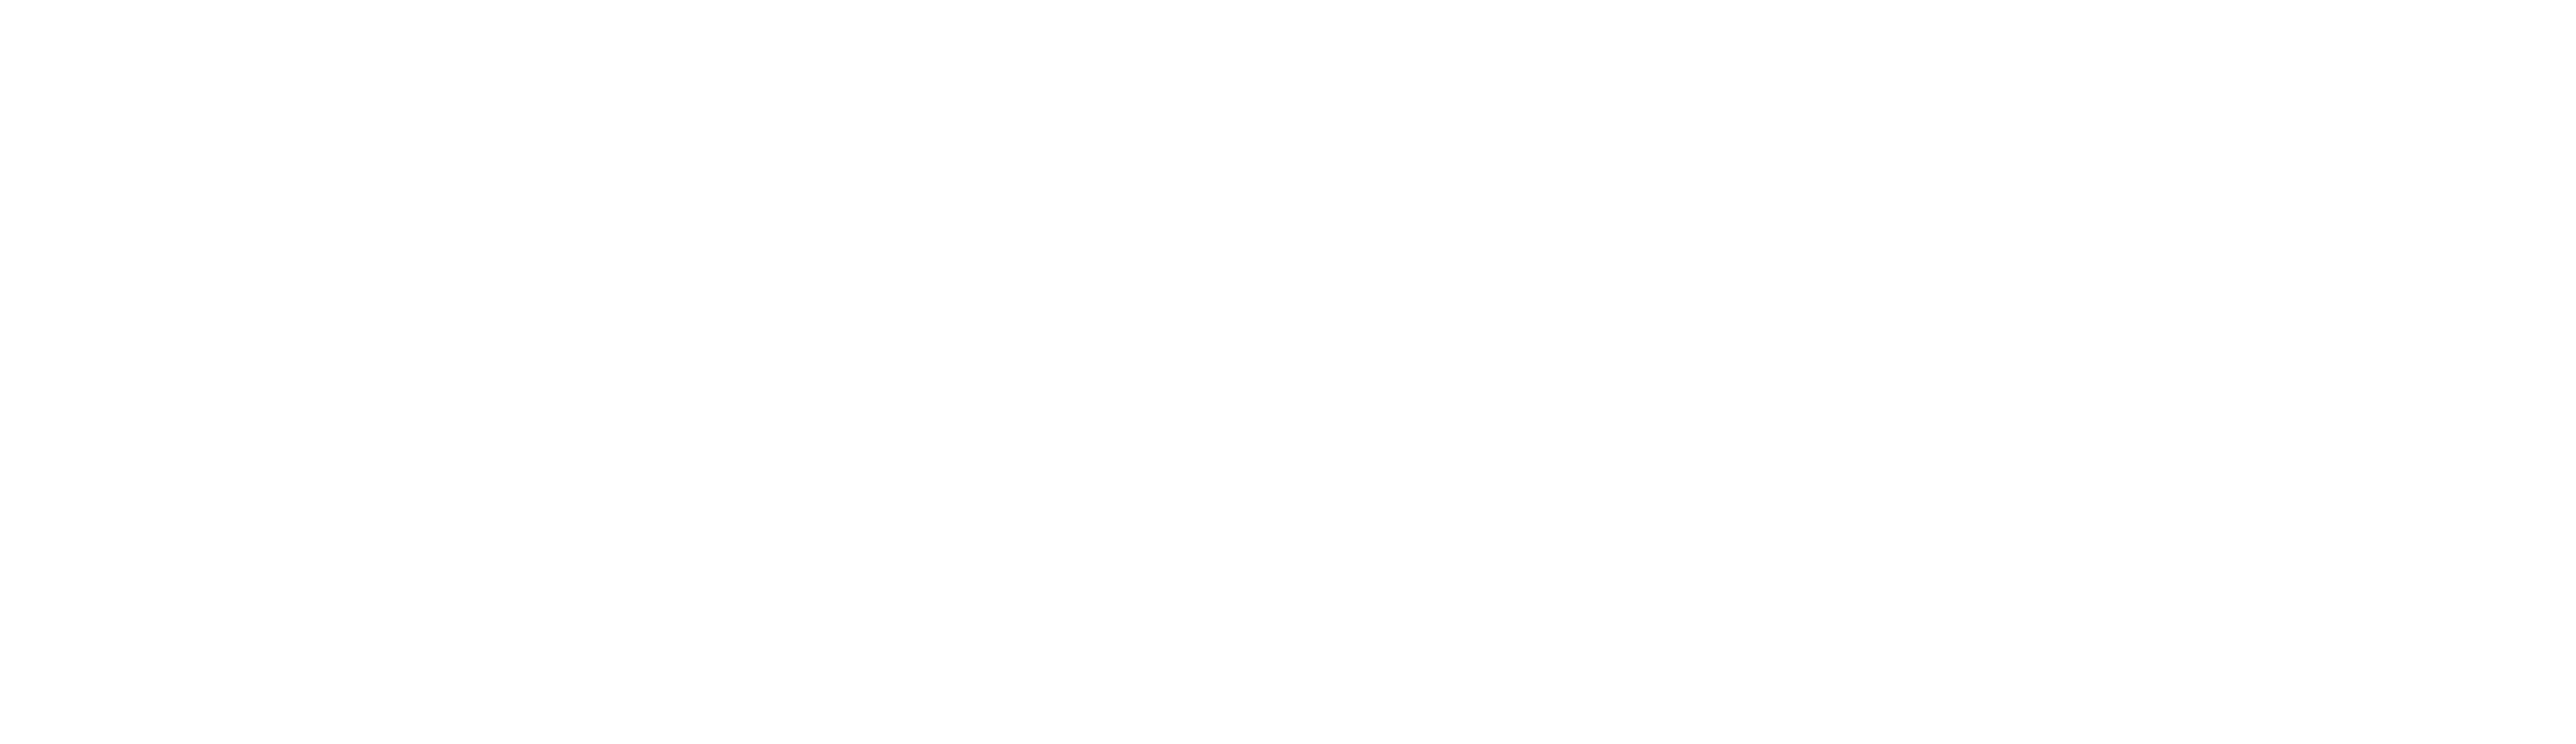 heneken-group-logo